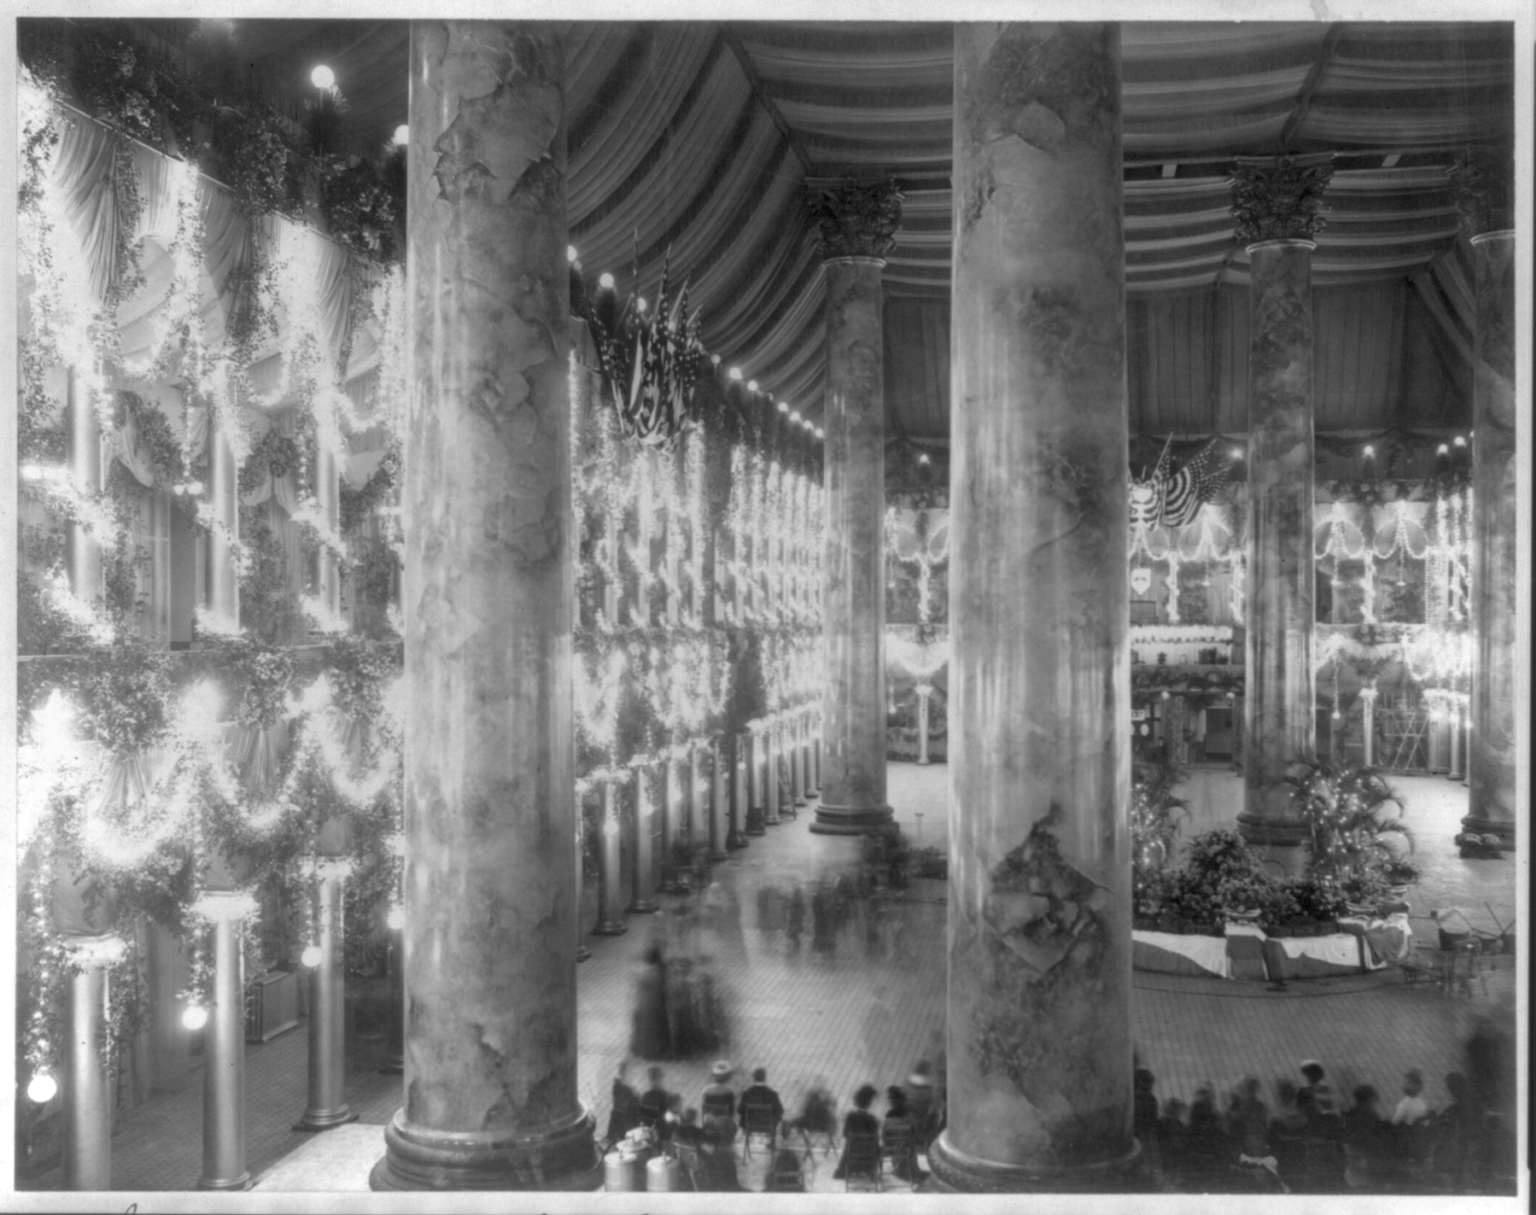 Interior of Inaugural ballroom. Photo by Frances B. Johnston, 1901. http://hdl.loc.gov/loc.pnp/cph.3a47103